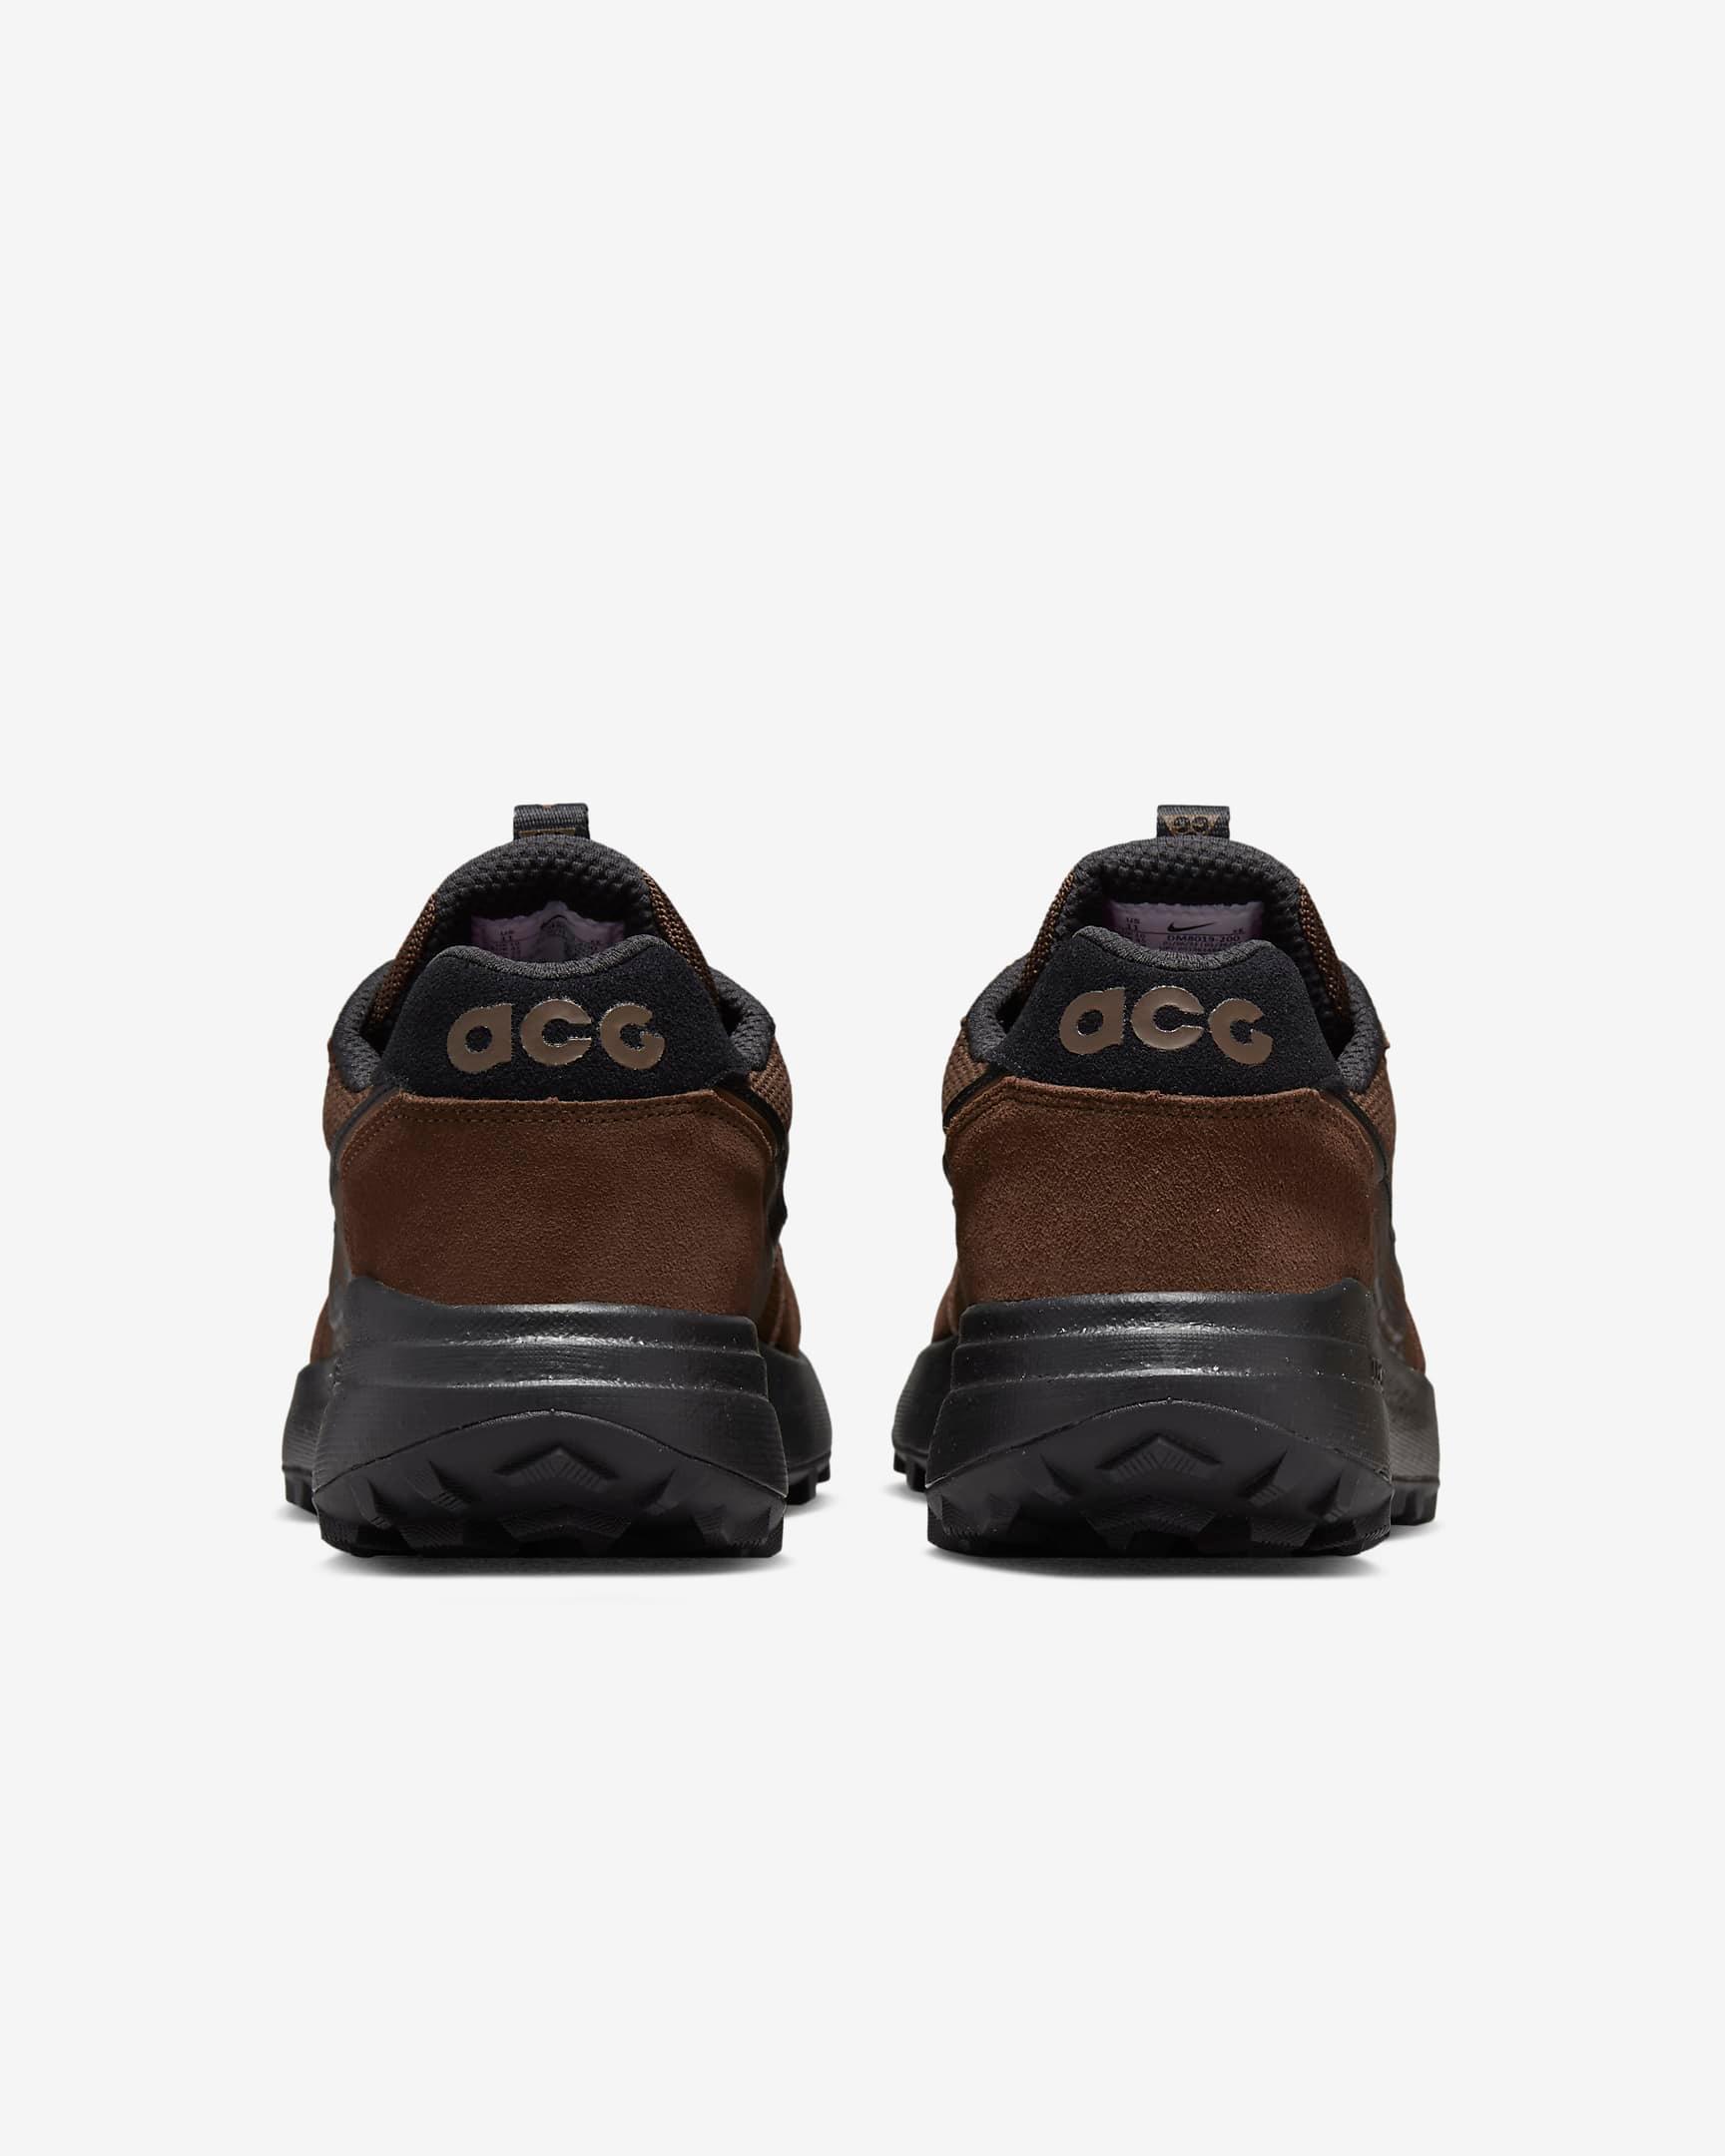 Giày Nike ACG Lowcate Shoes #Cacao Wow - Kallos Vietnam